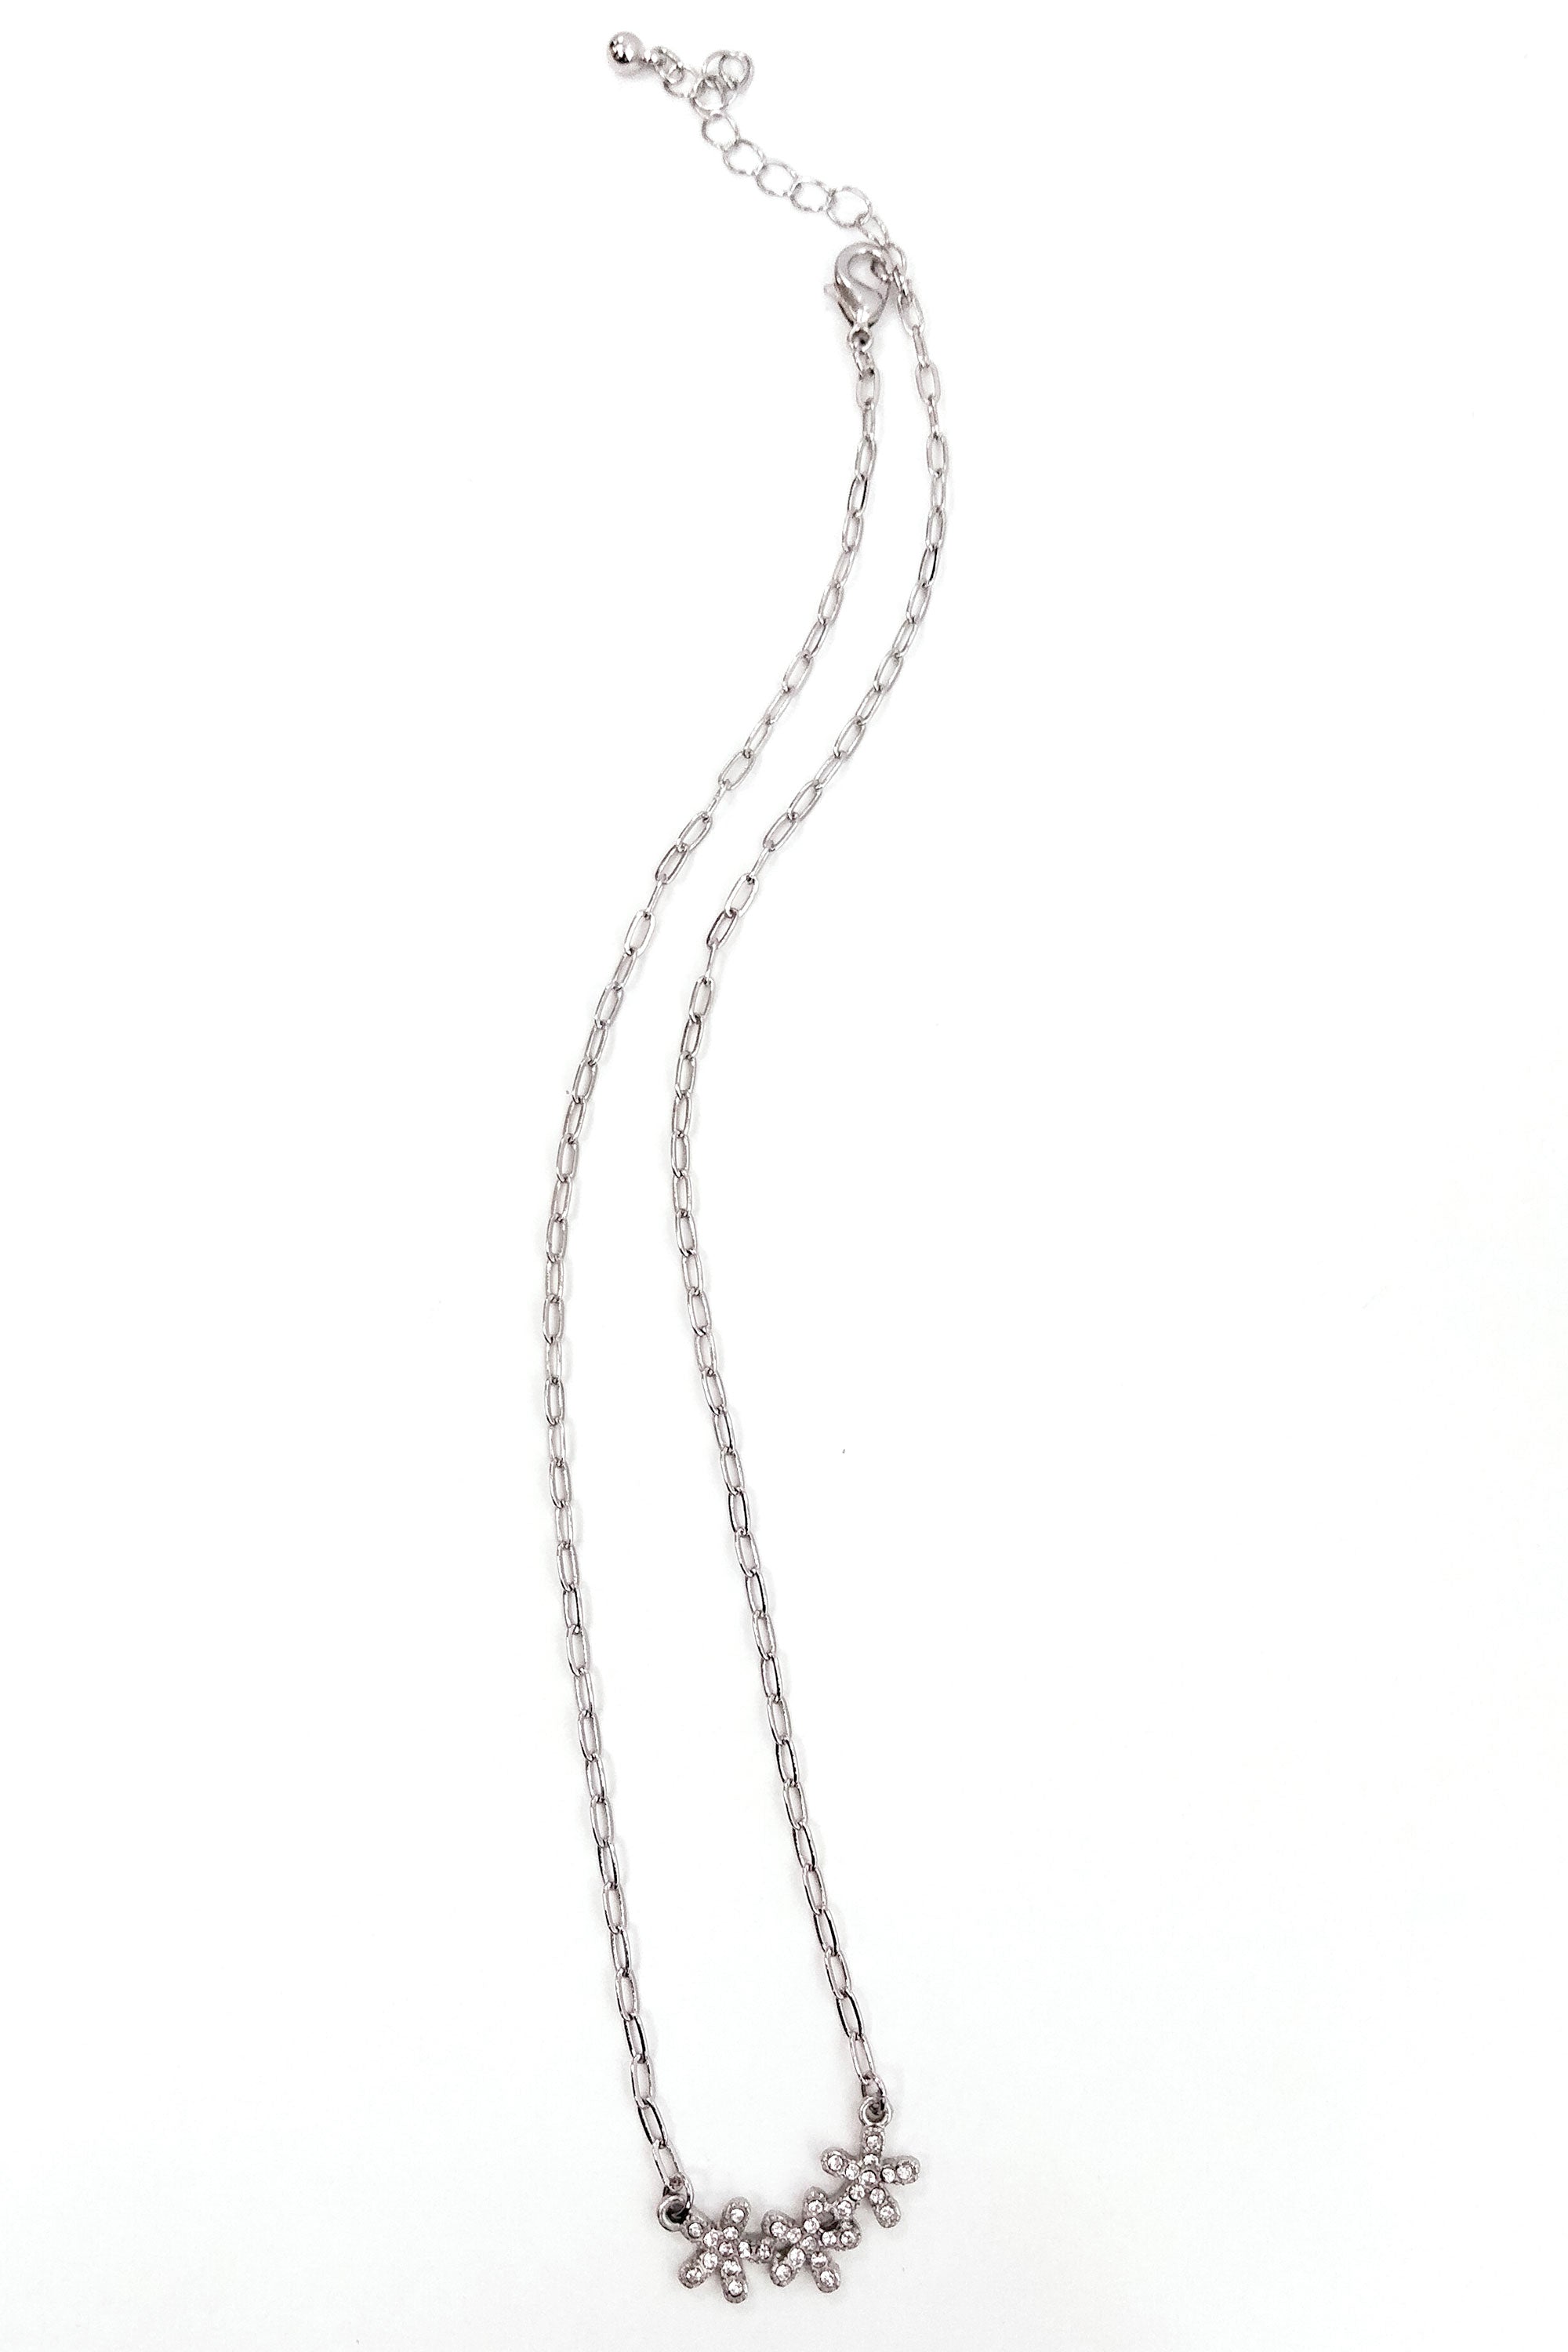 Silver Rhineston Flower Pendant Necklace